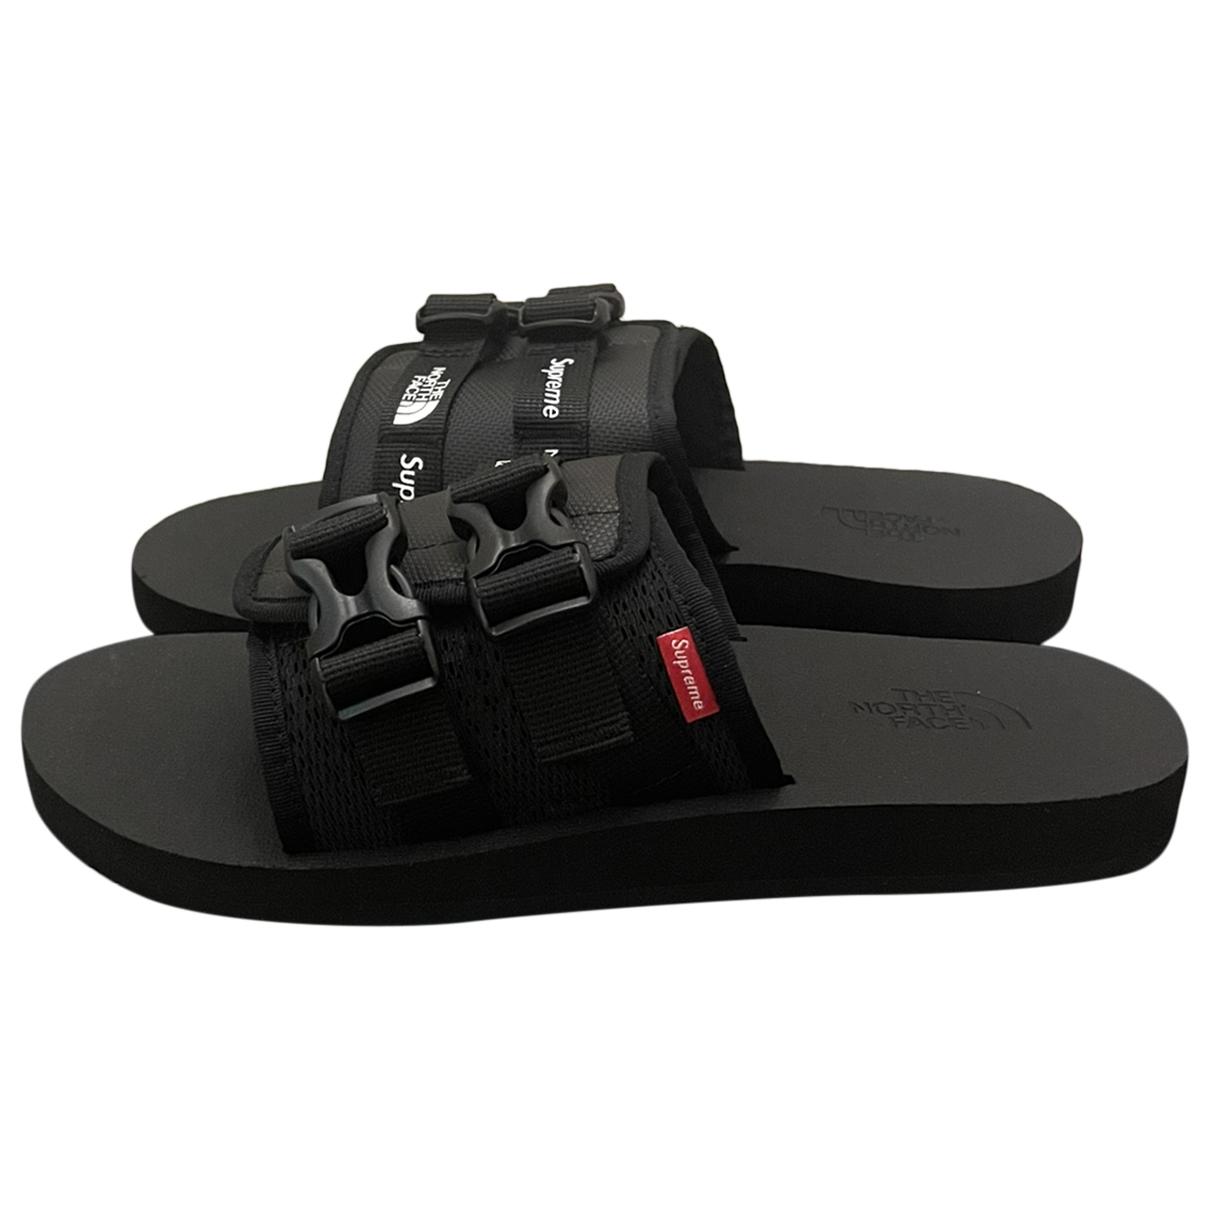 Sandals Supreme x The North Face Black size 41 EU in Rubber - 32024655